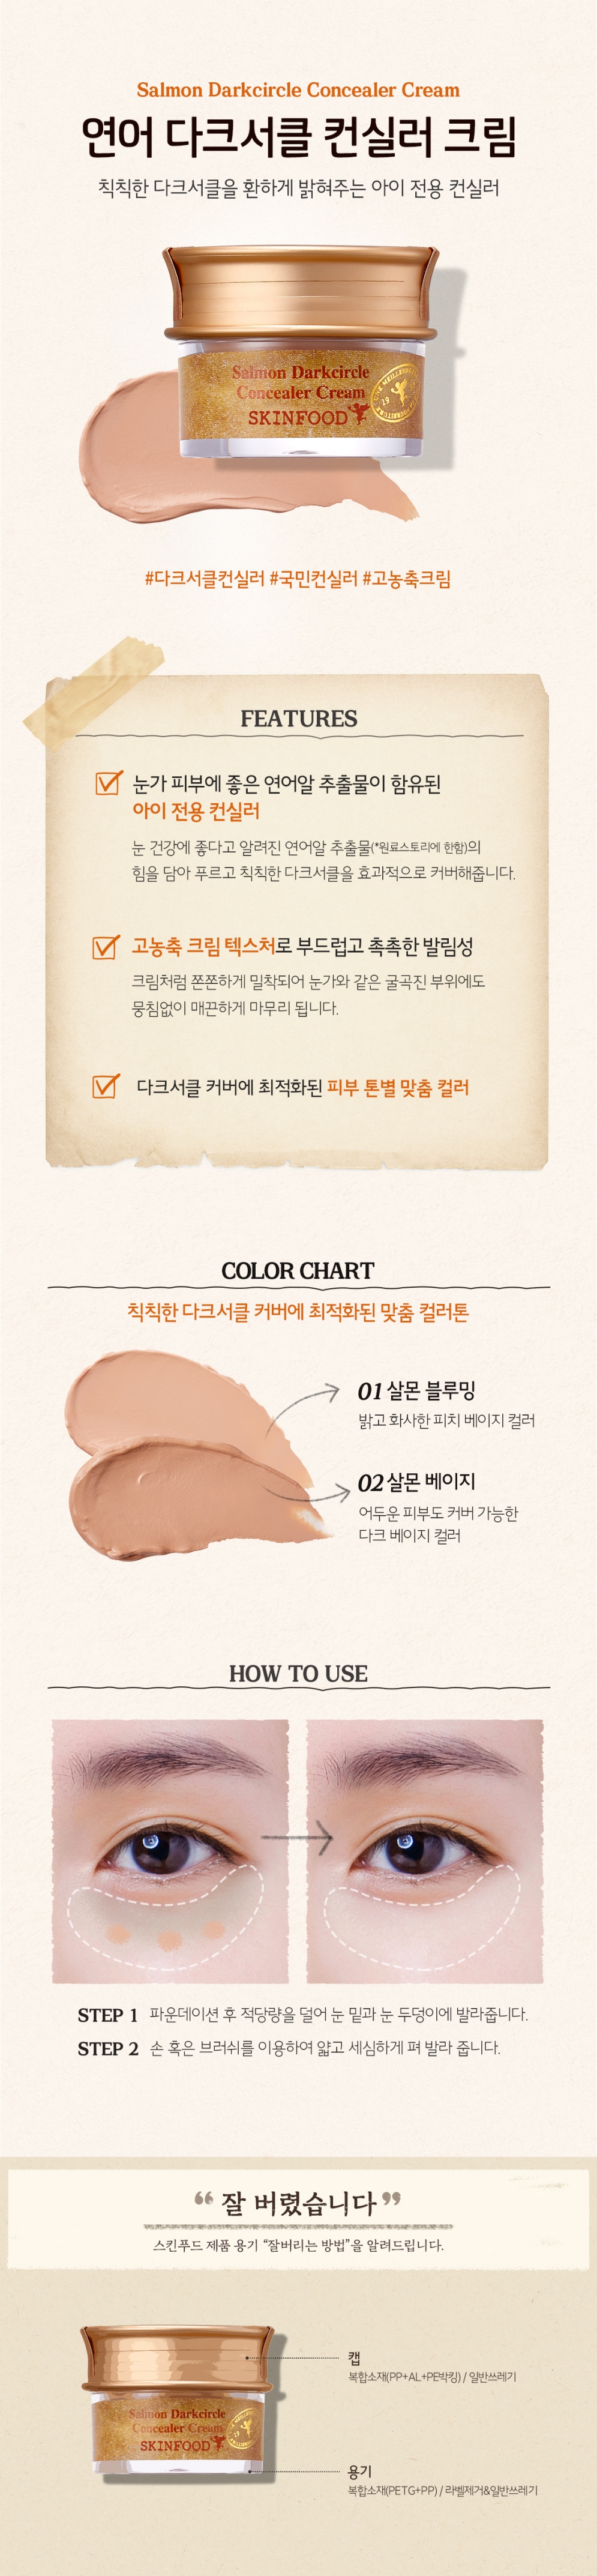 Regan filter Net Skinfood Salmon Darkcircle Concealer Cream (2 Colors) | StyleKorean.com